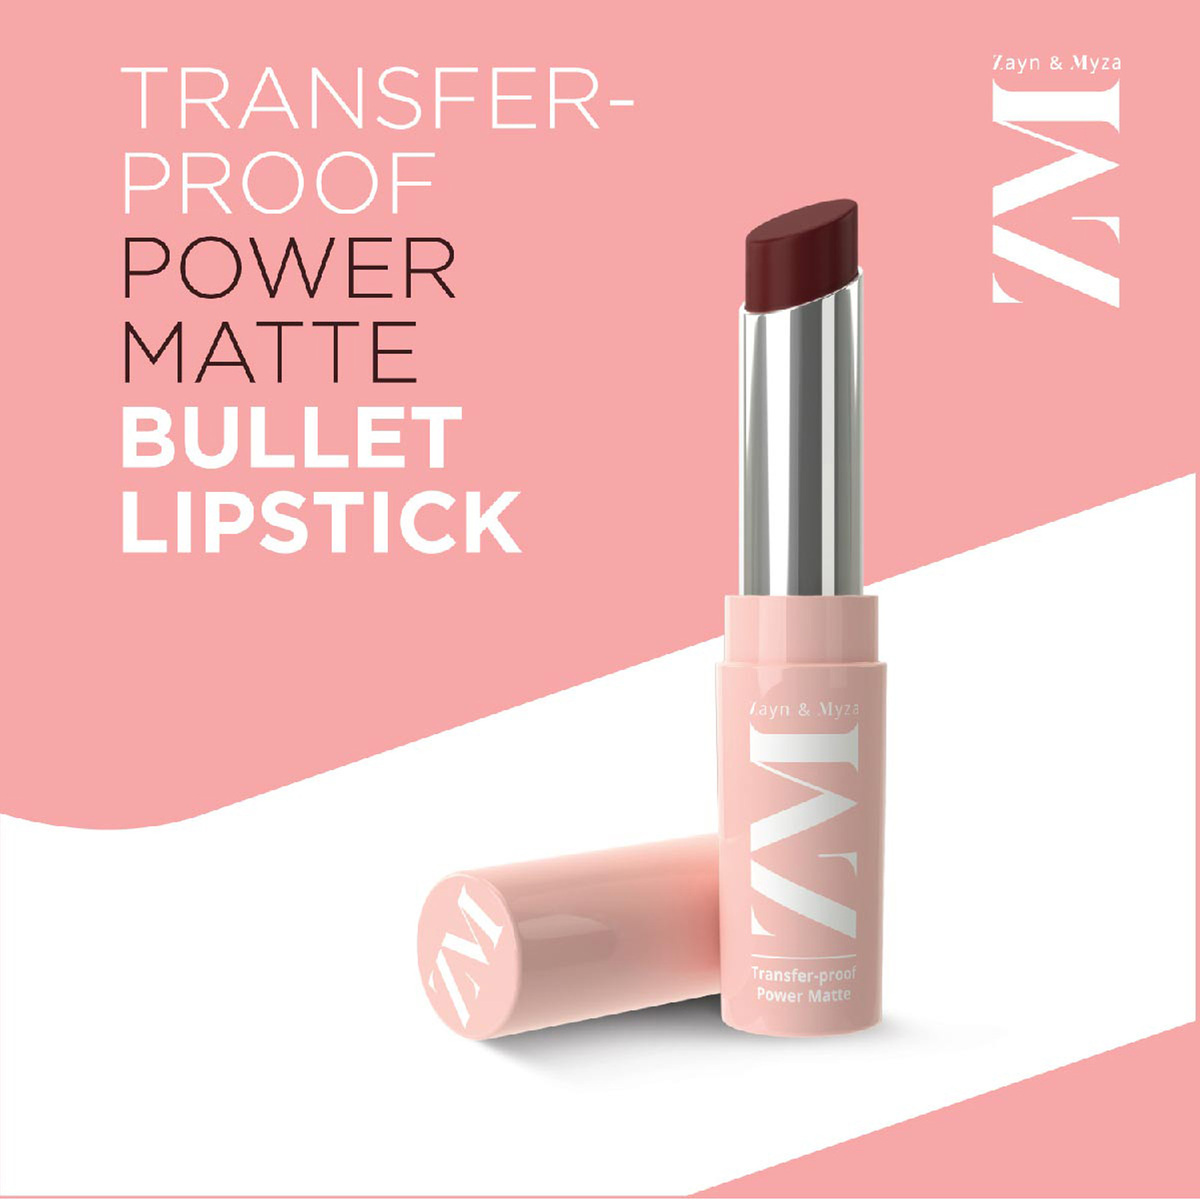 Zayn & Myza Transfer-Proof Power Intense Creamy Matte Color Bullet Lipstick, 3.2 g, Selfie Red